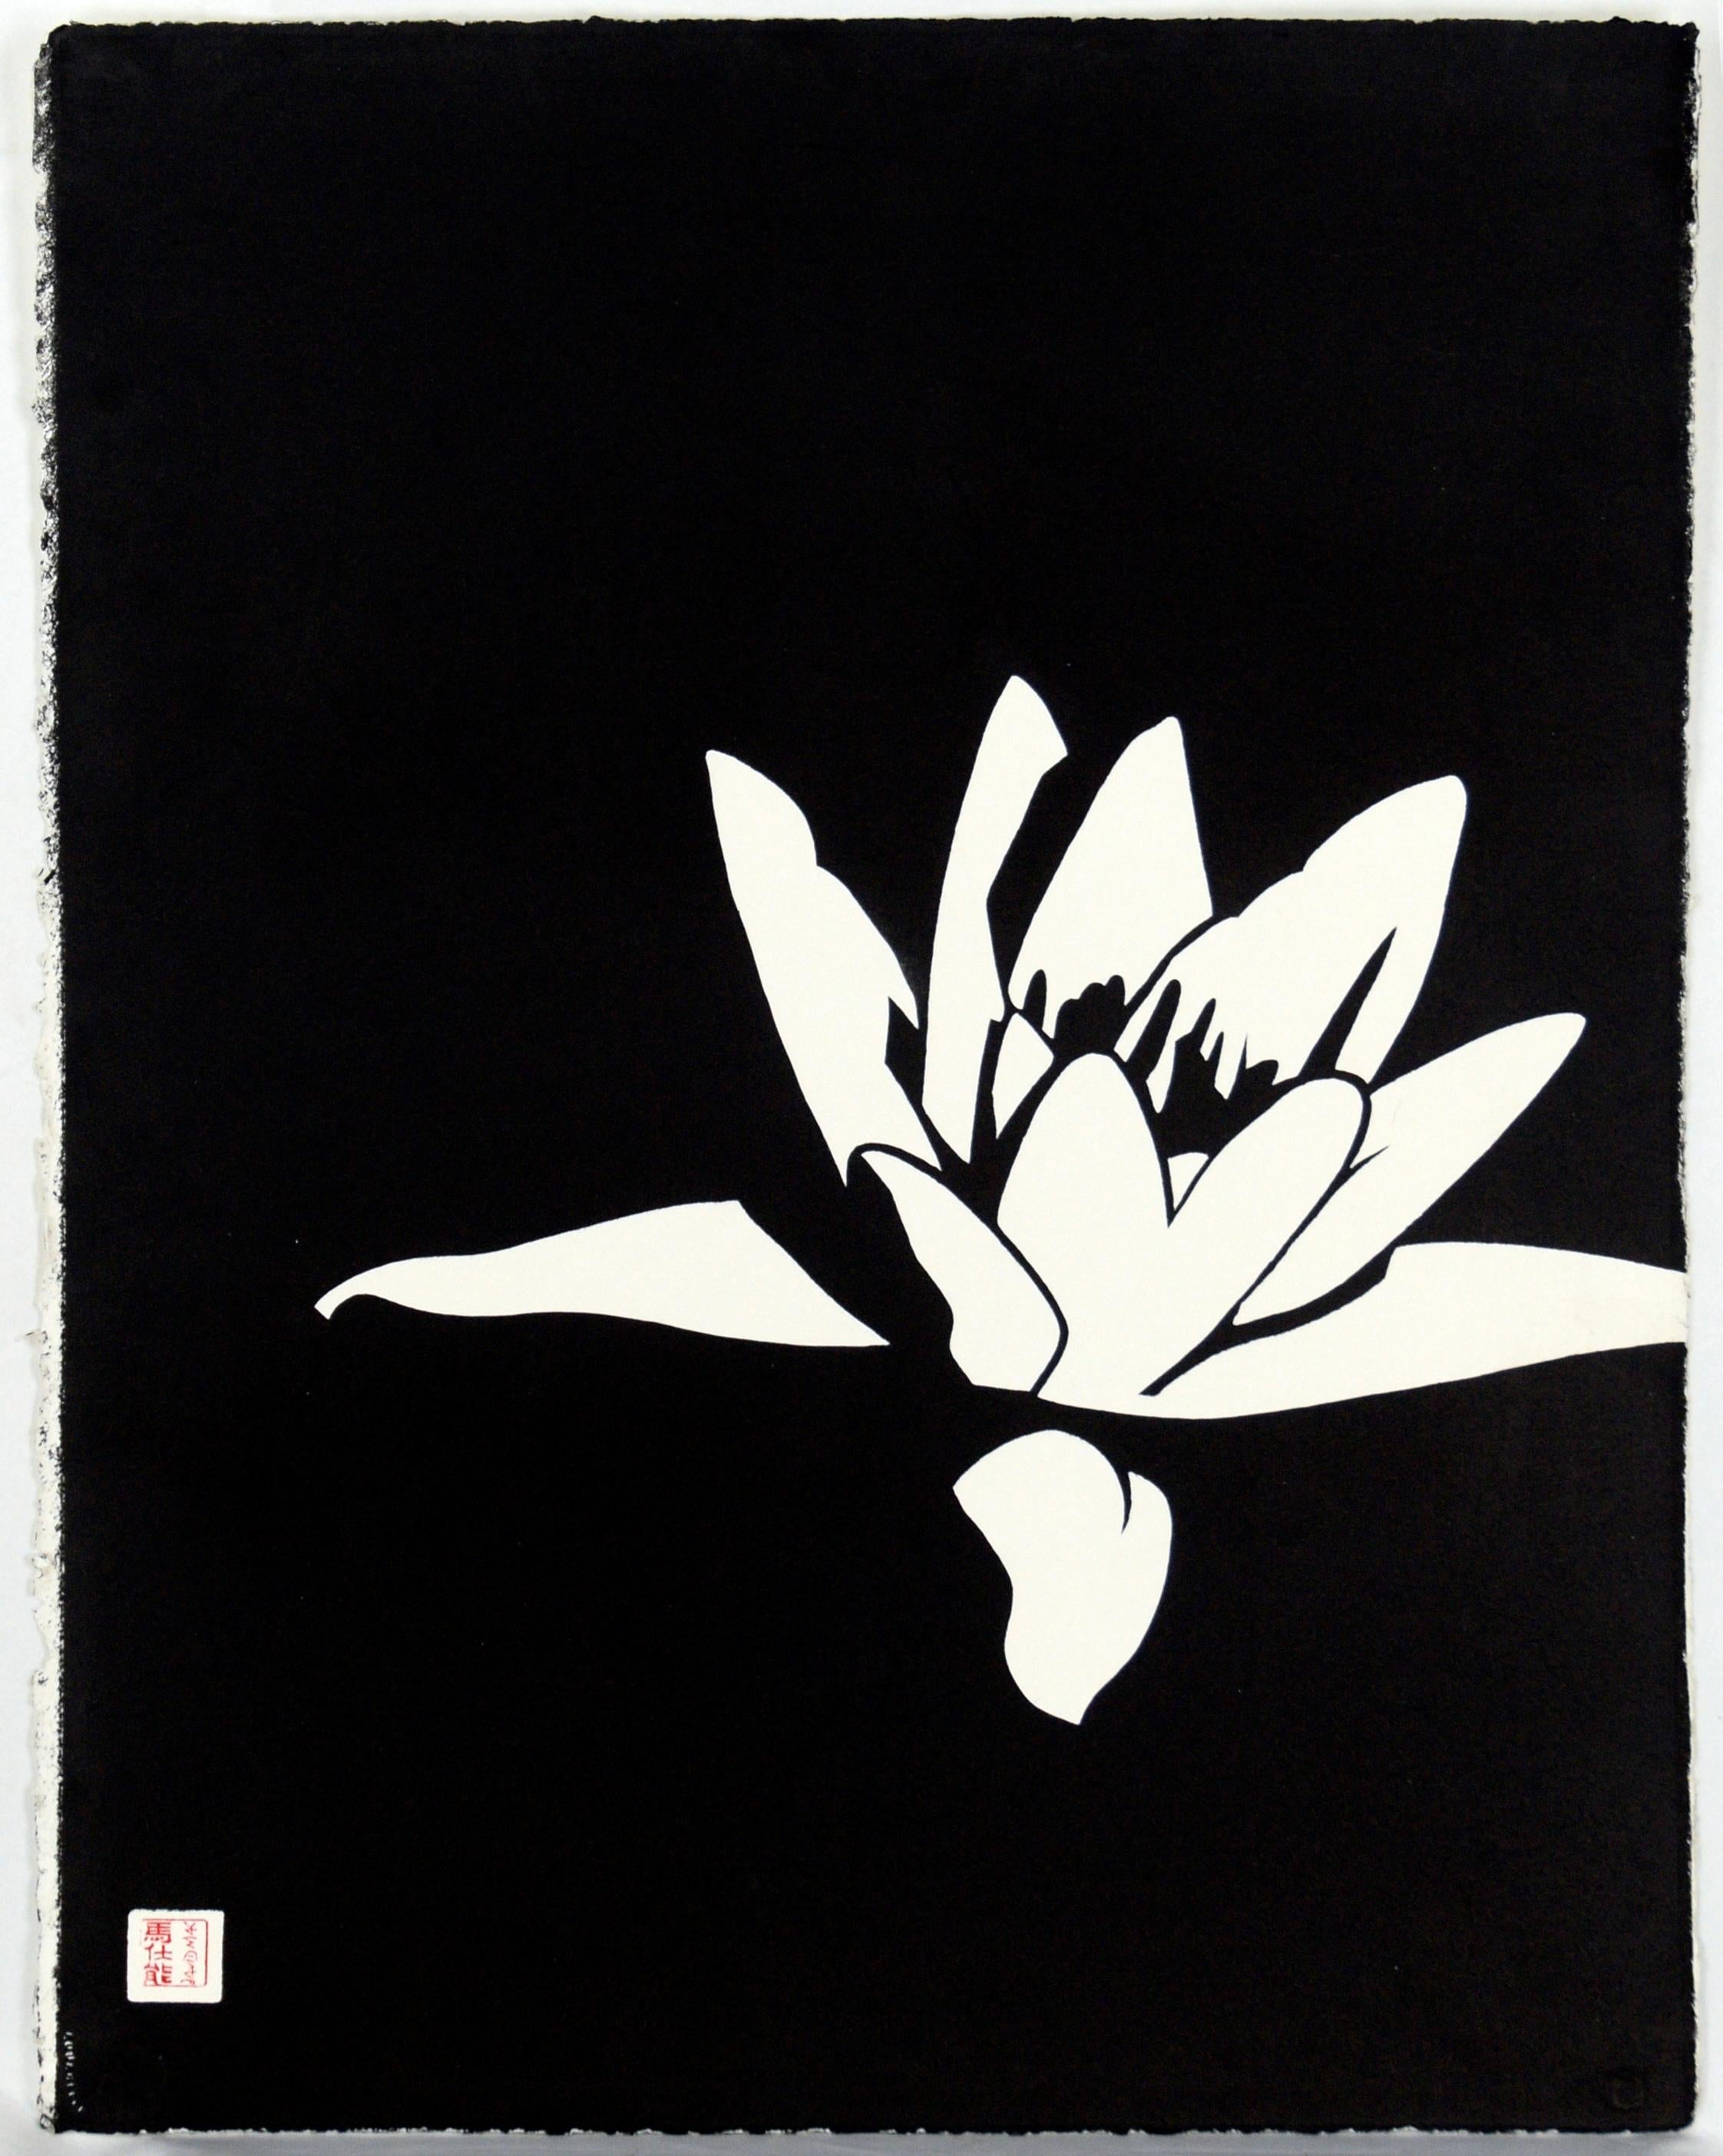 White Lily - Minimalist Pop Art Screenprint - Print by David Mar